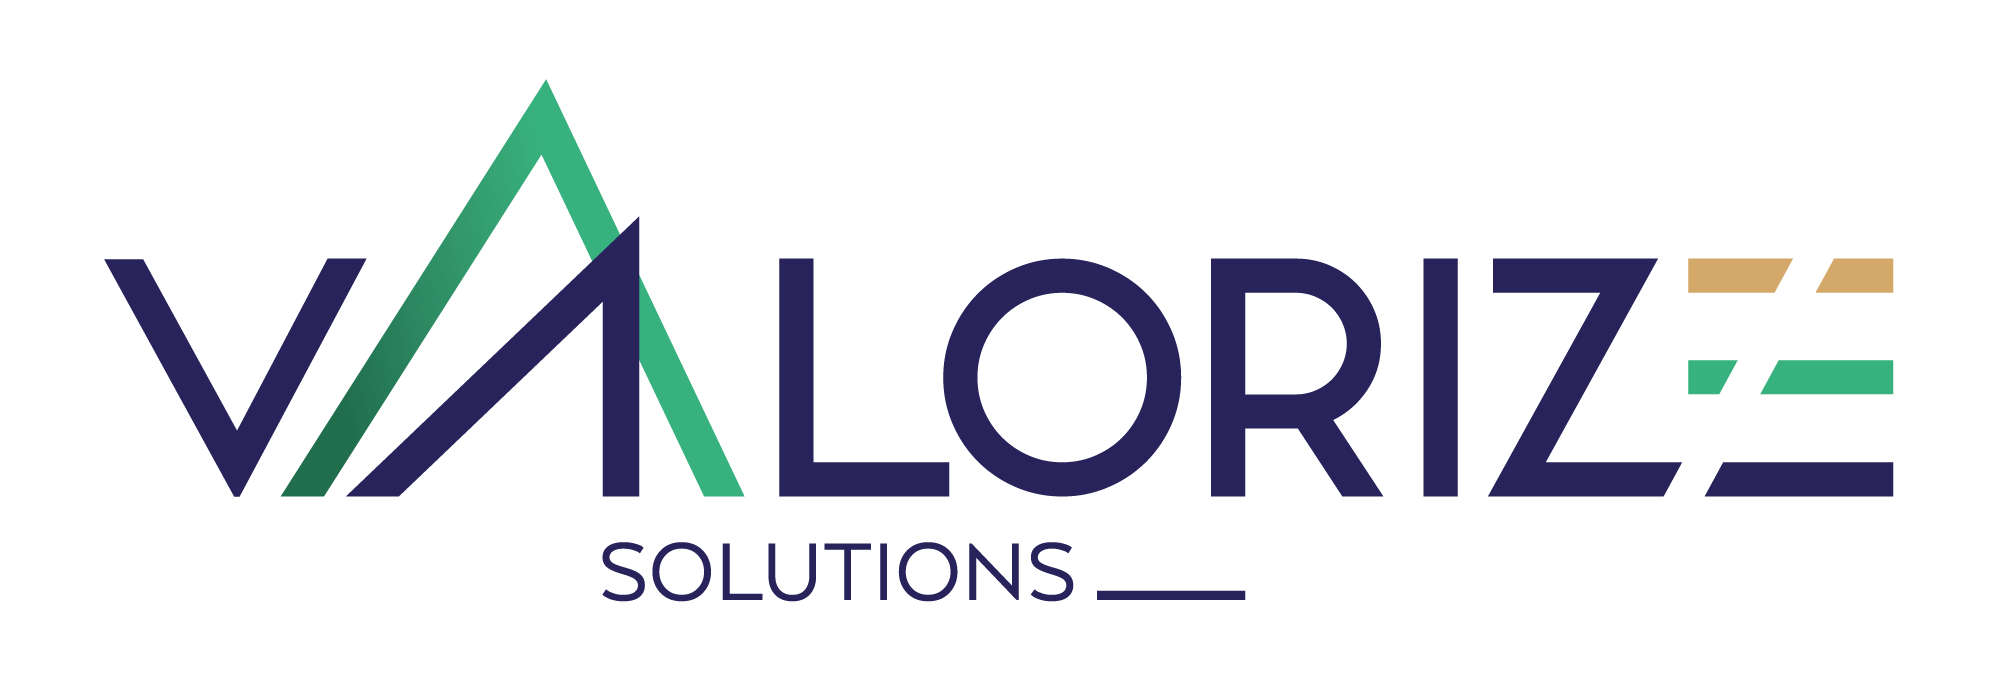 Logo Valorize Solutions